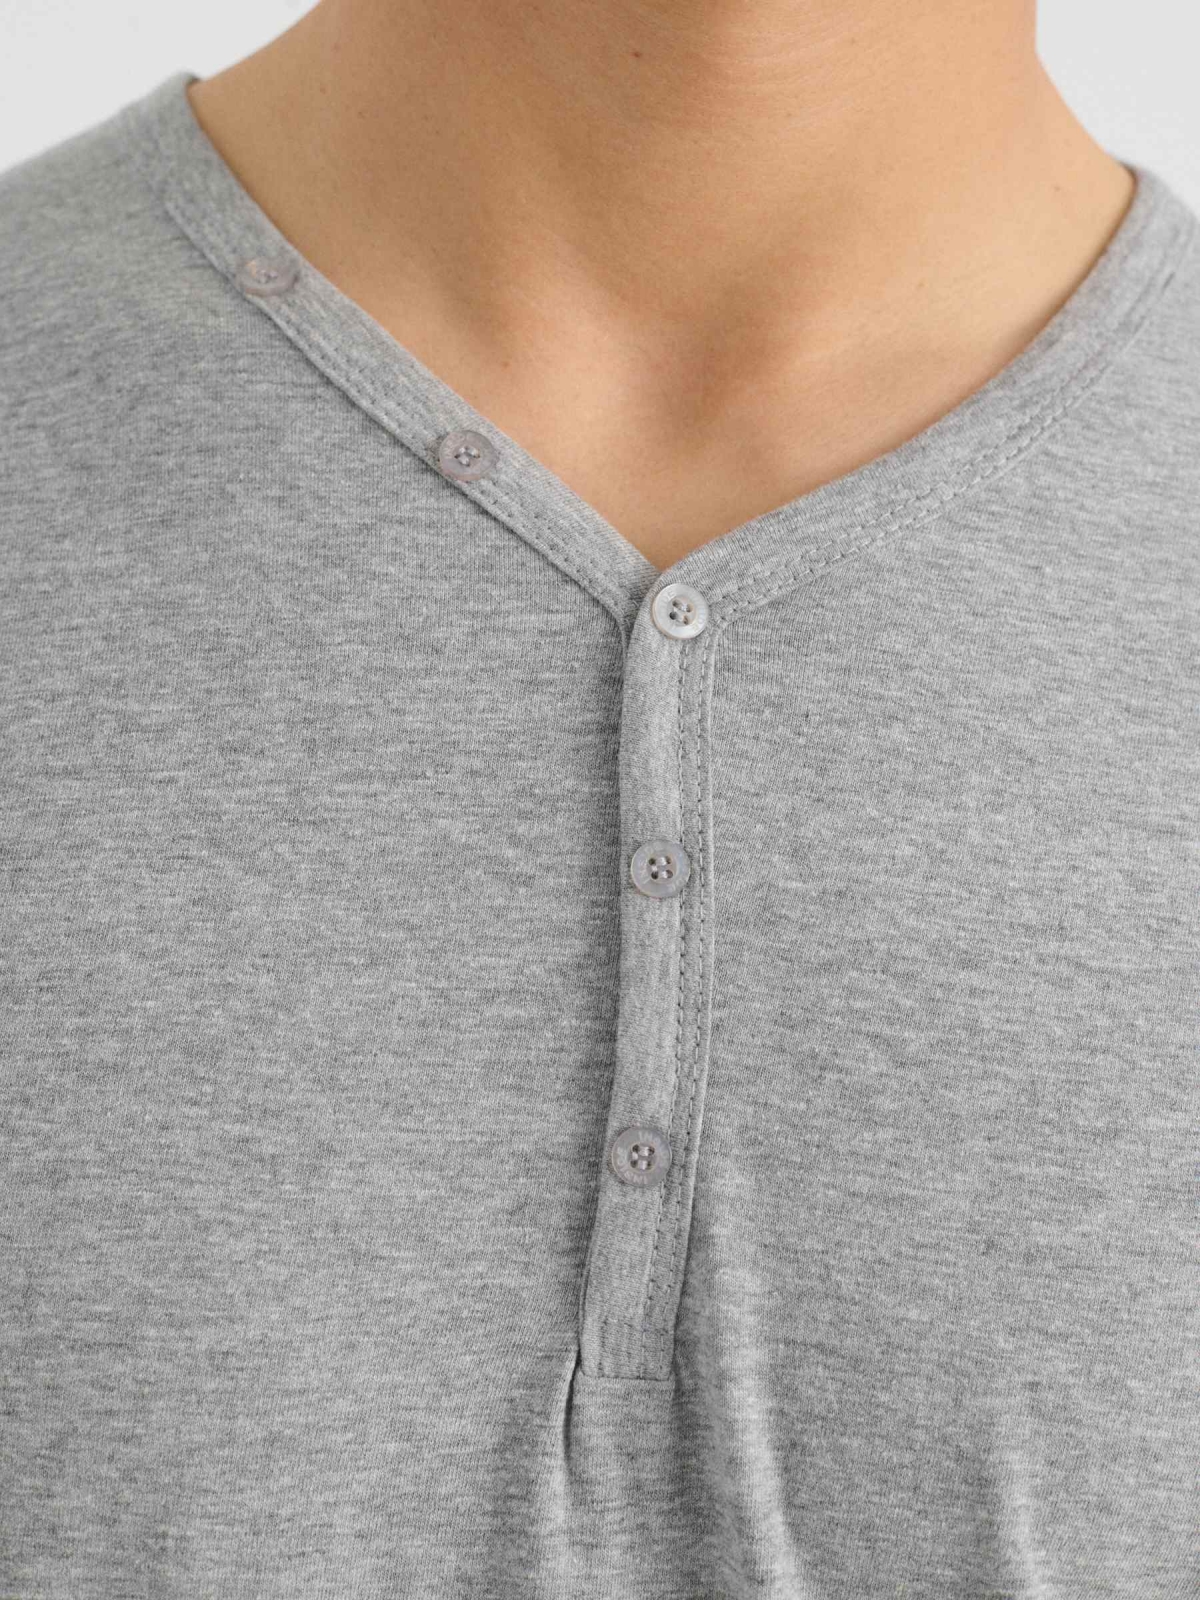 Buttons neck t-shirt grey detail view